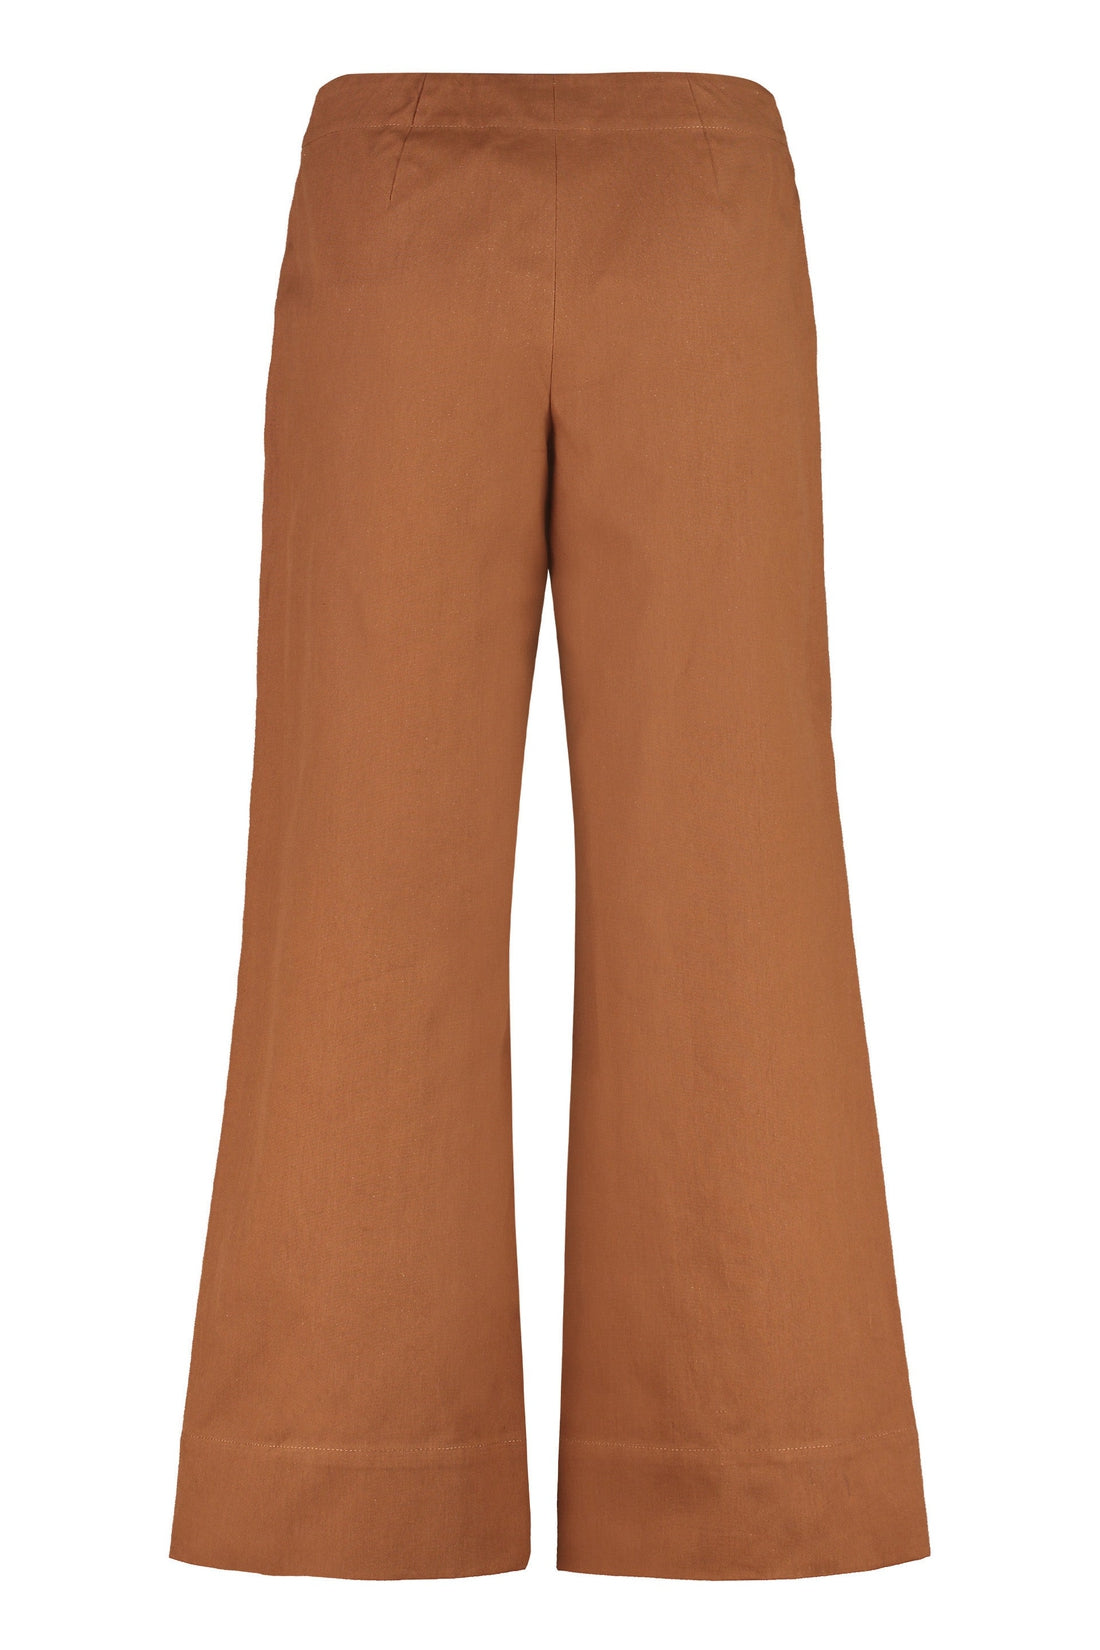 Max Mara-OUTLET-SALE-Lonza high-rise cotton trousers-ARCHIVIST